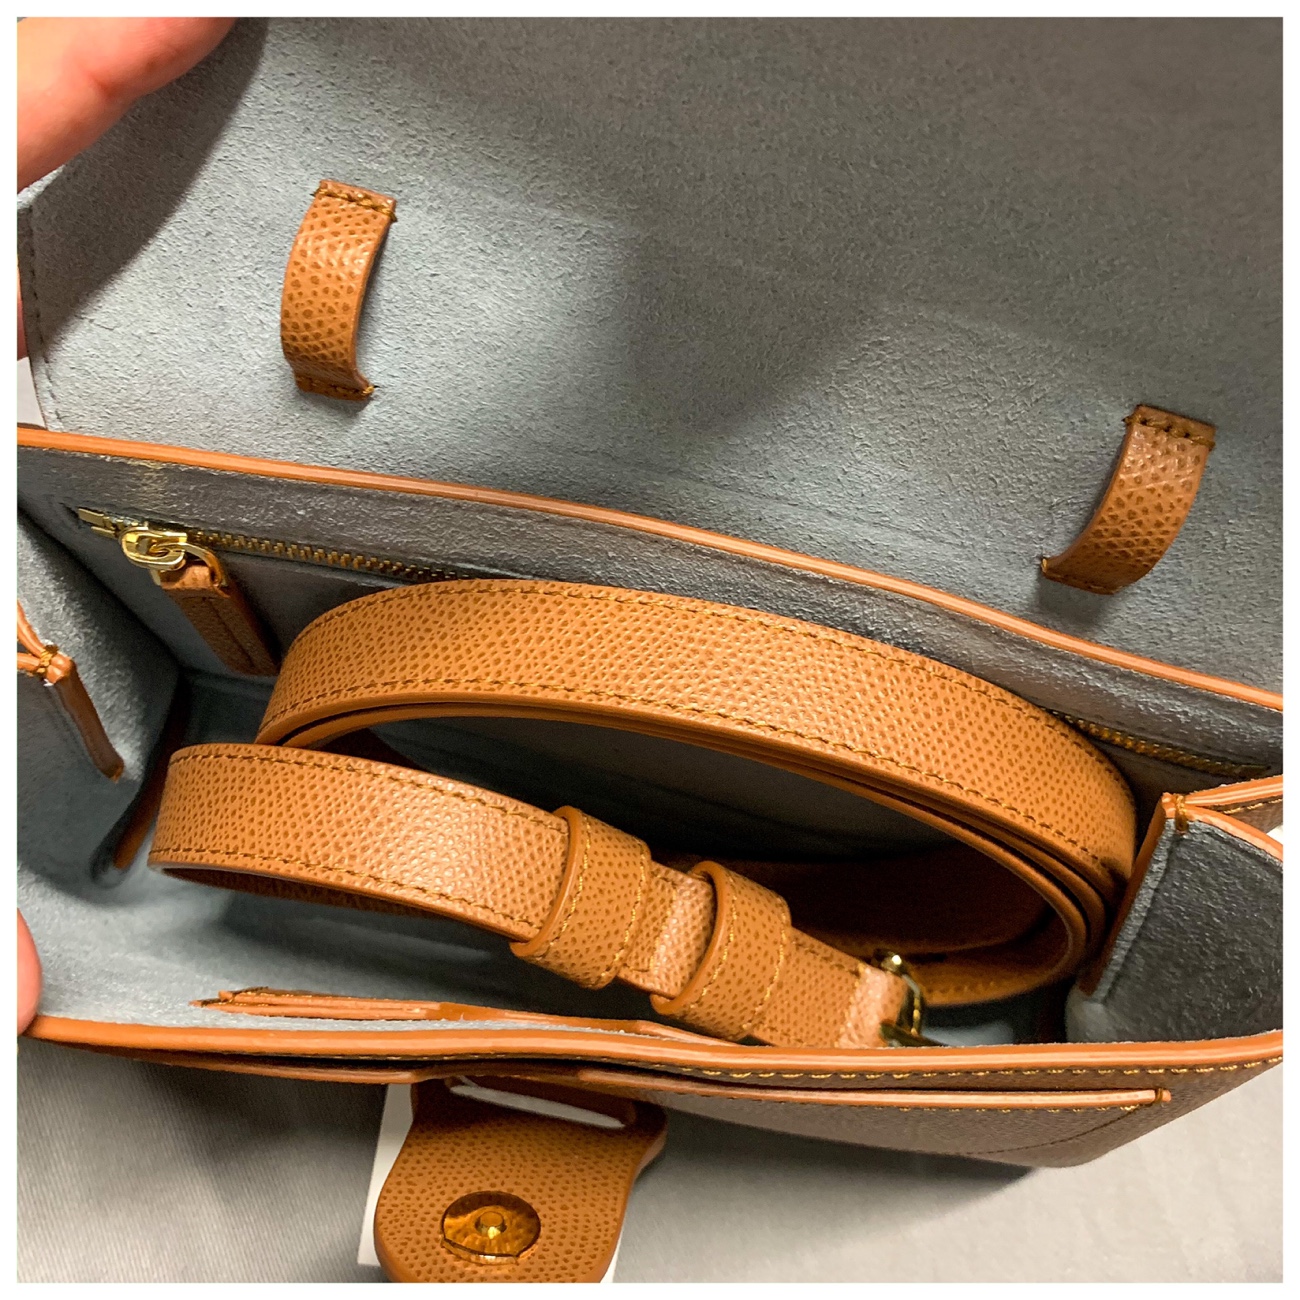 HONEST REVIEW - 1 Year w/ My Senreve Aria Belt Bag & Bracelet Pouch - What  Fits Inside & Mod Shots 